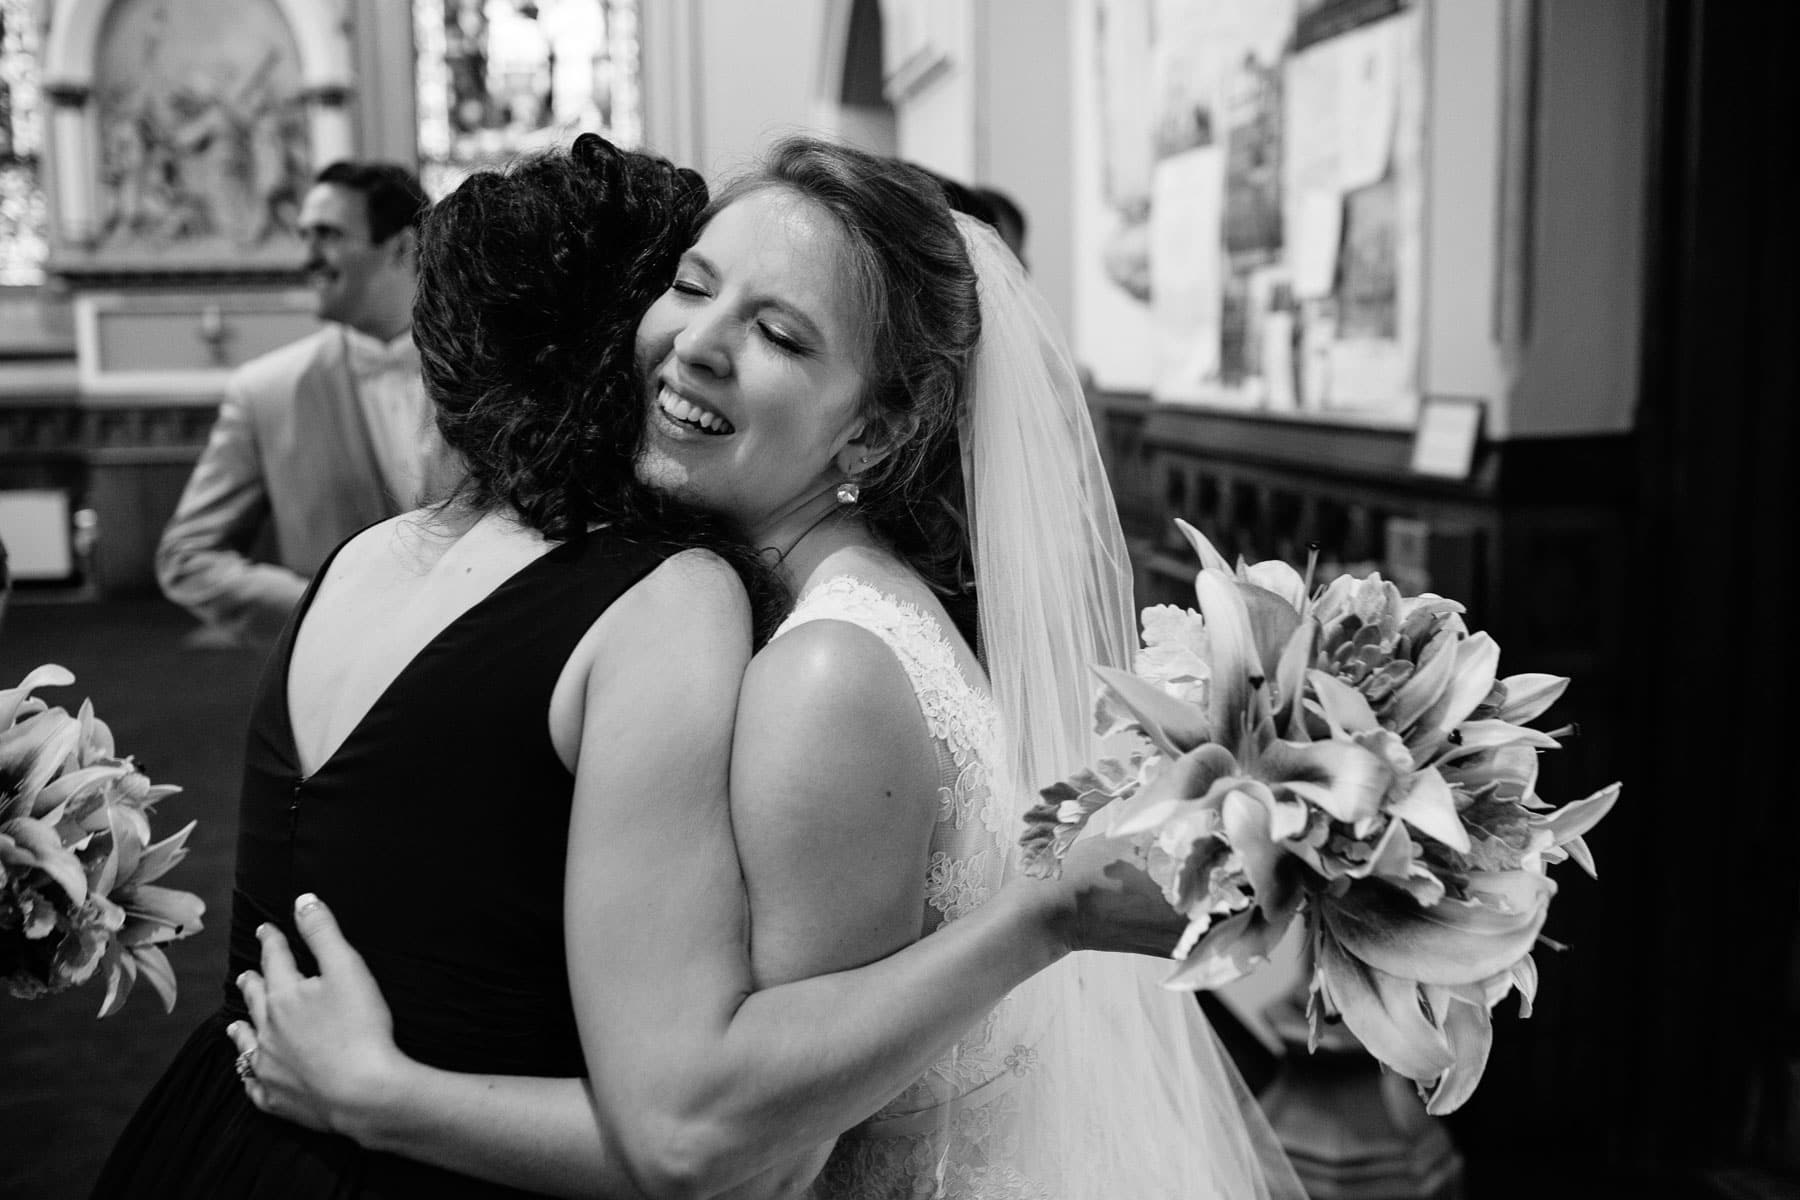 Peggy and Anthony's wedding ceremony at Saint Mary - Saint Catherine of Siena in Charlestown, MA | Kelly Benvenuto Photography | Boston Wedding Photographer